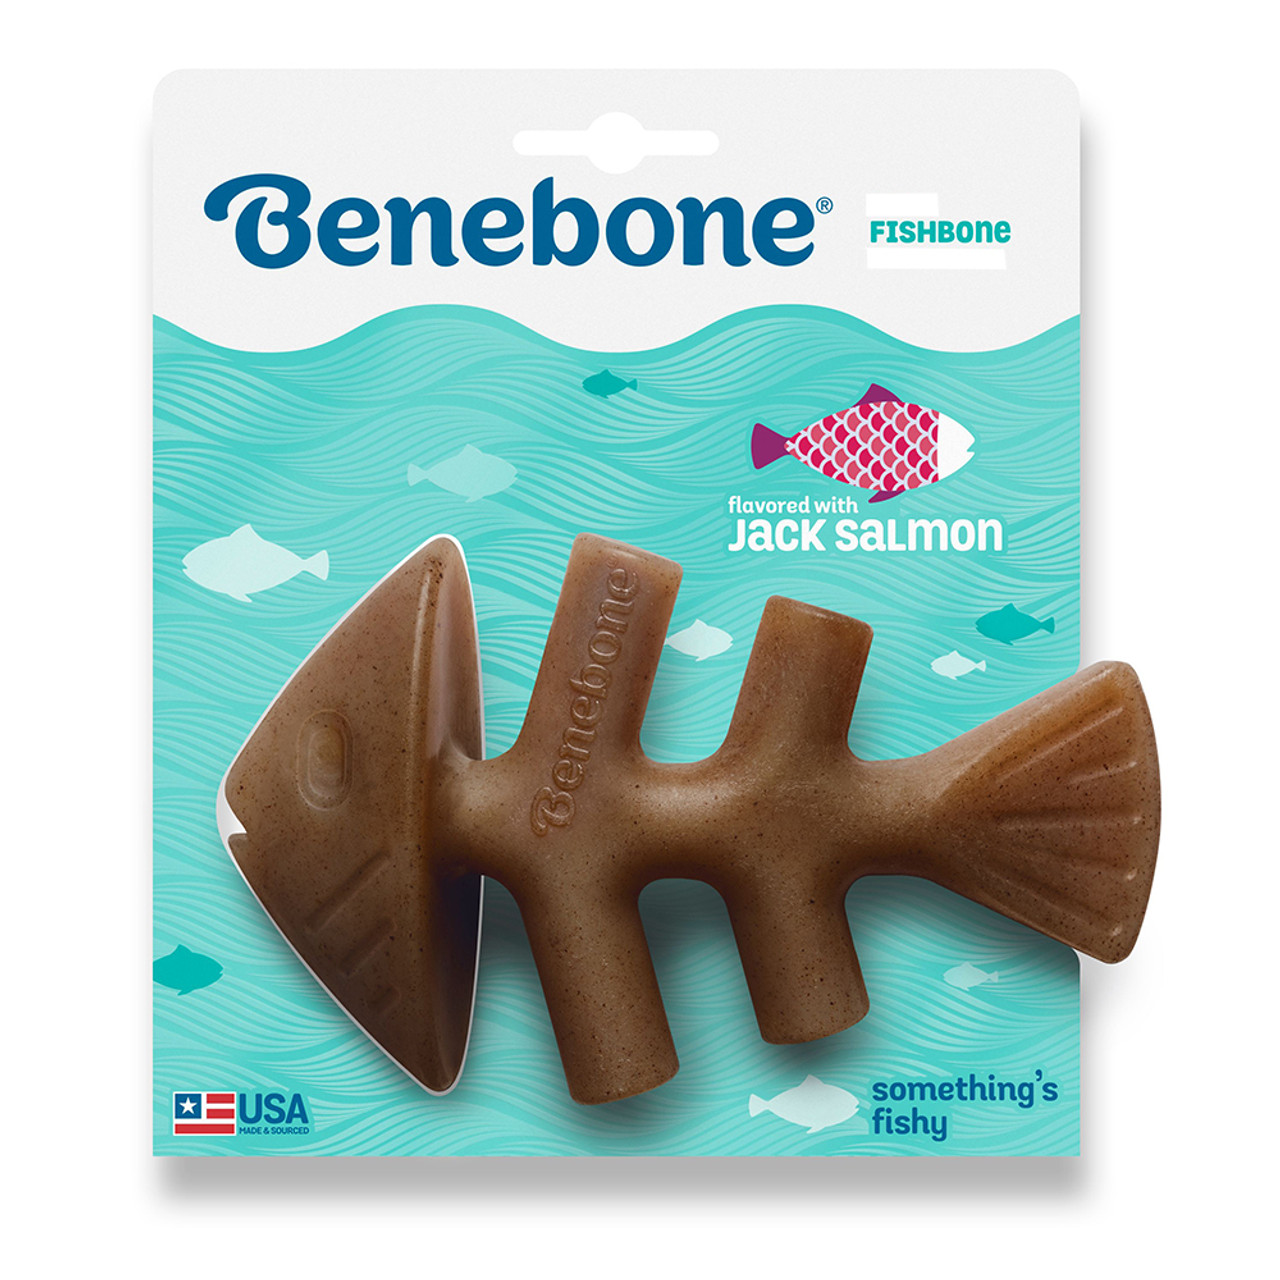 Benebone Fishbone Jack Salmon Flavor Dog Chew Toy - Package